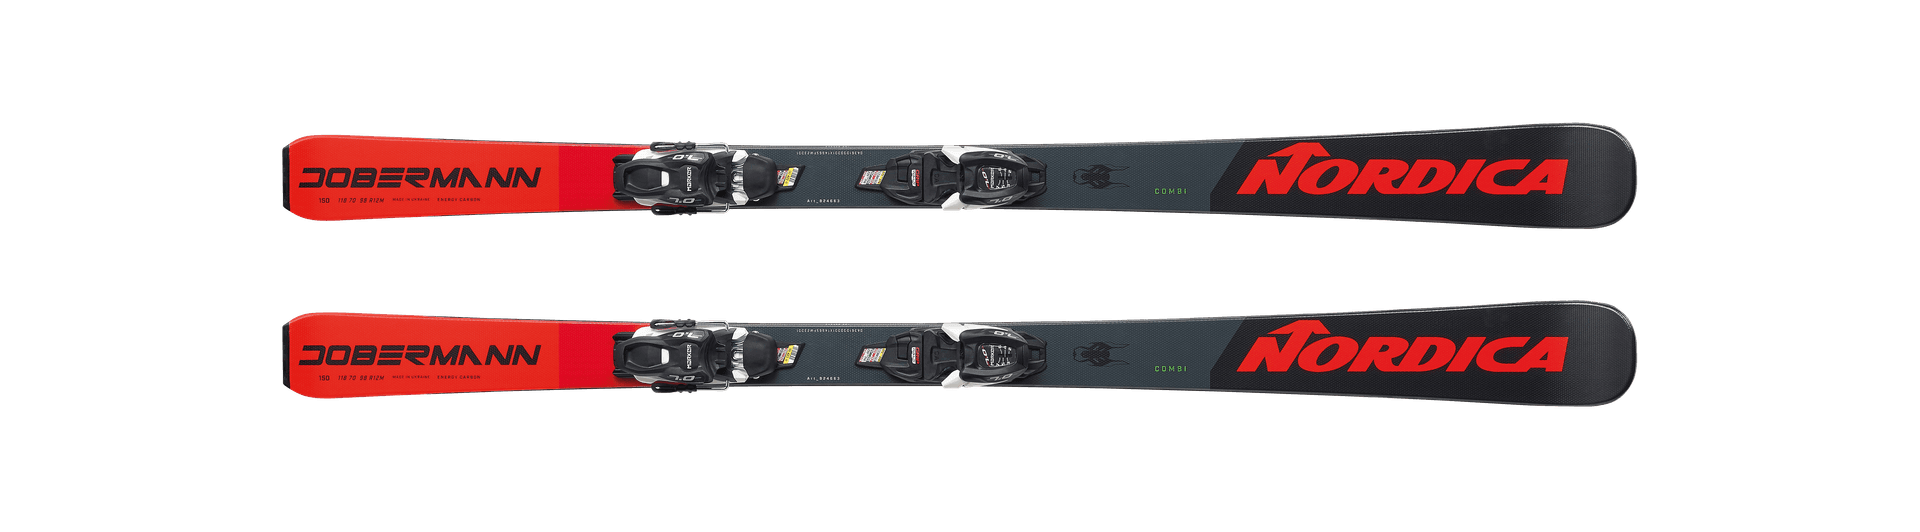 Picture of the Nordica Dobermann combi pro s (jr 7.0 fdt) skis.